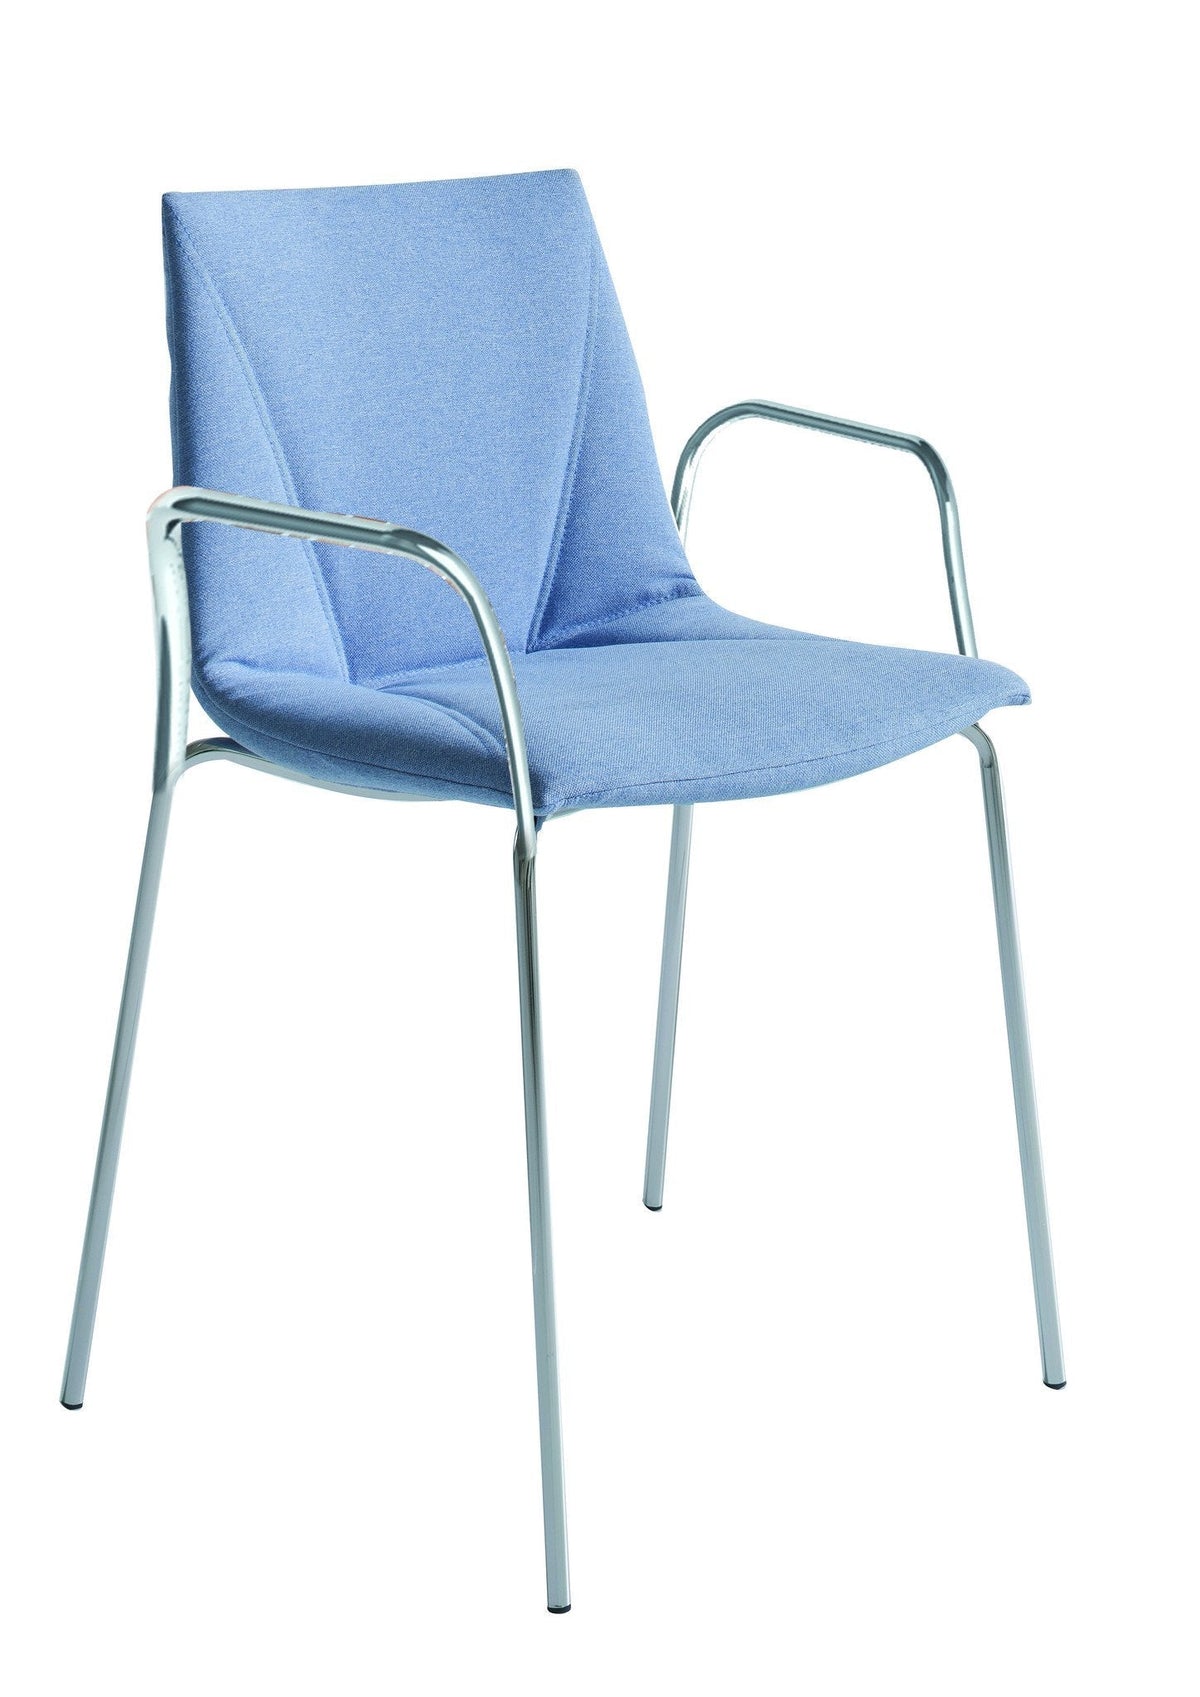 Colorfive Armchair c/w Metal Legs-Gaber-Contract Furniture Store